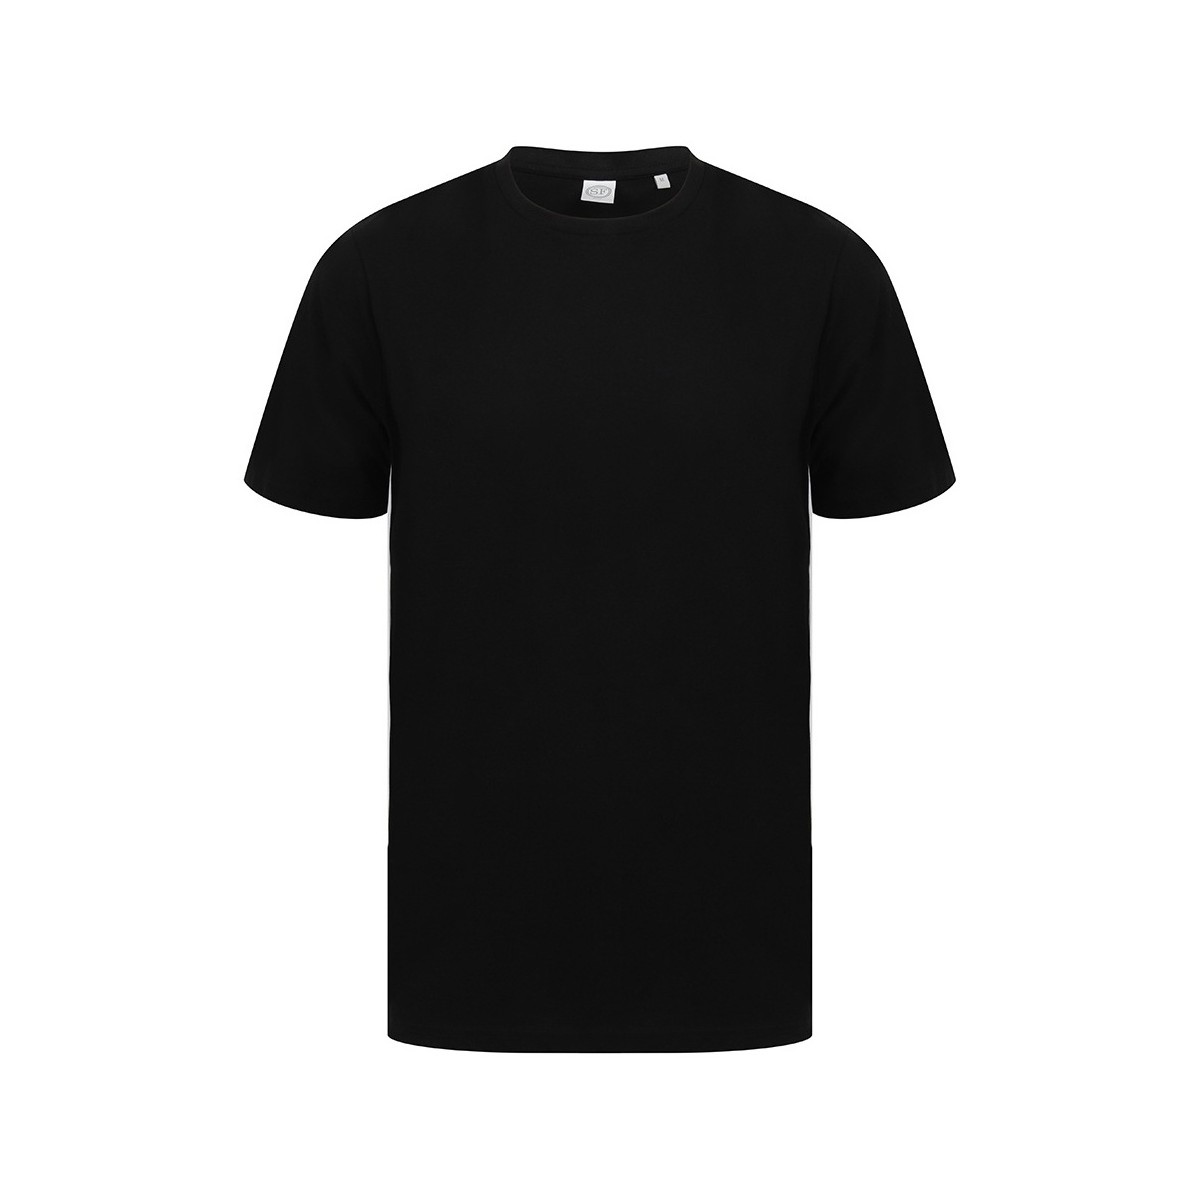 textil Camisetas manga larga Sf SF253 Negro